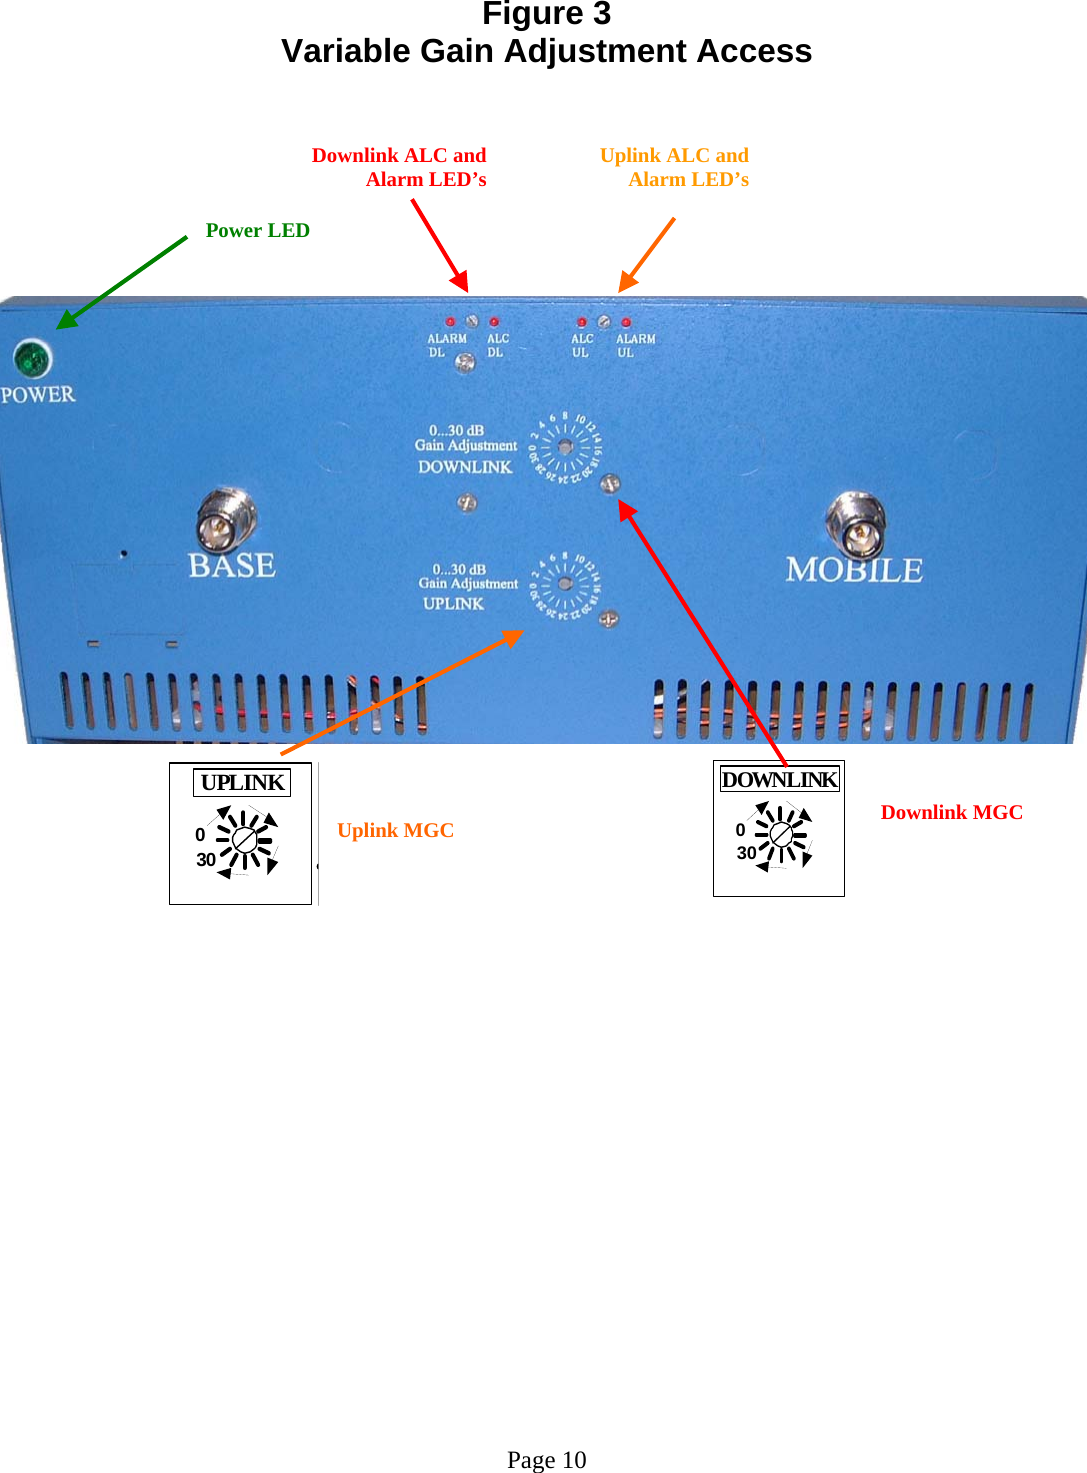 Figure 3 Variable Gain Adjustment Access    030UPLINK030DOWNLINK                                         Page 10 Uplink MGCPower LEDDownlink ALC and Alarm LED’s Uplink ALC and Alarm LED’sDownlink MGC